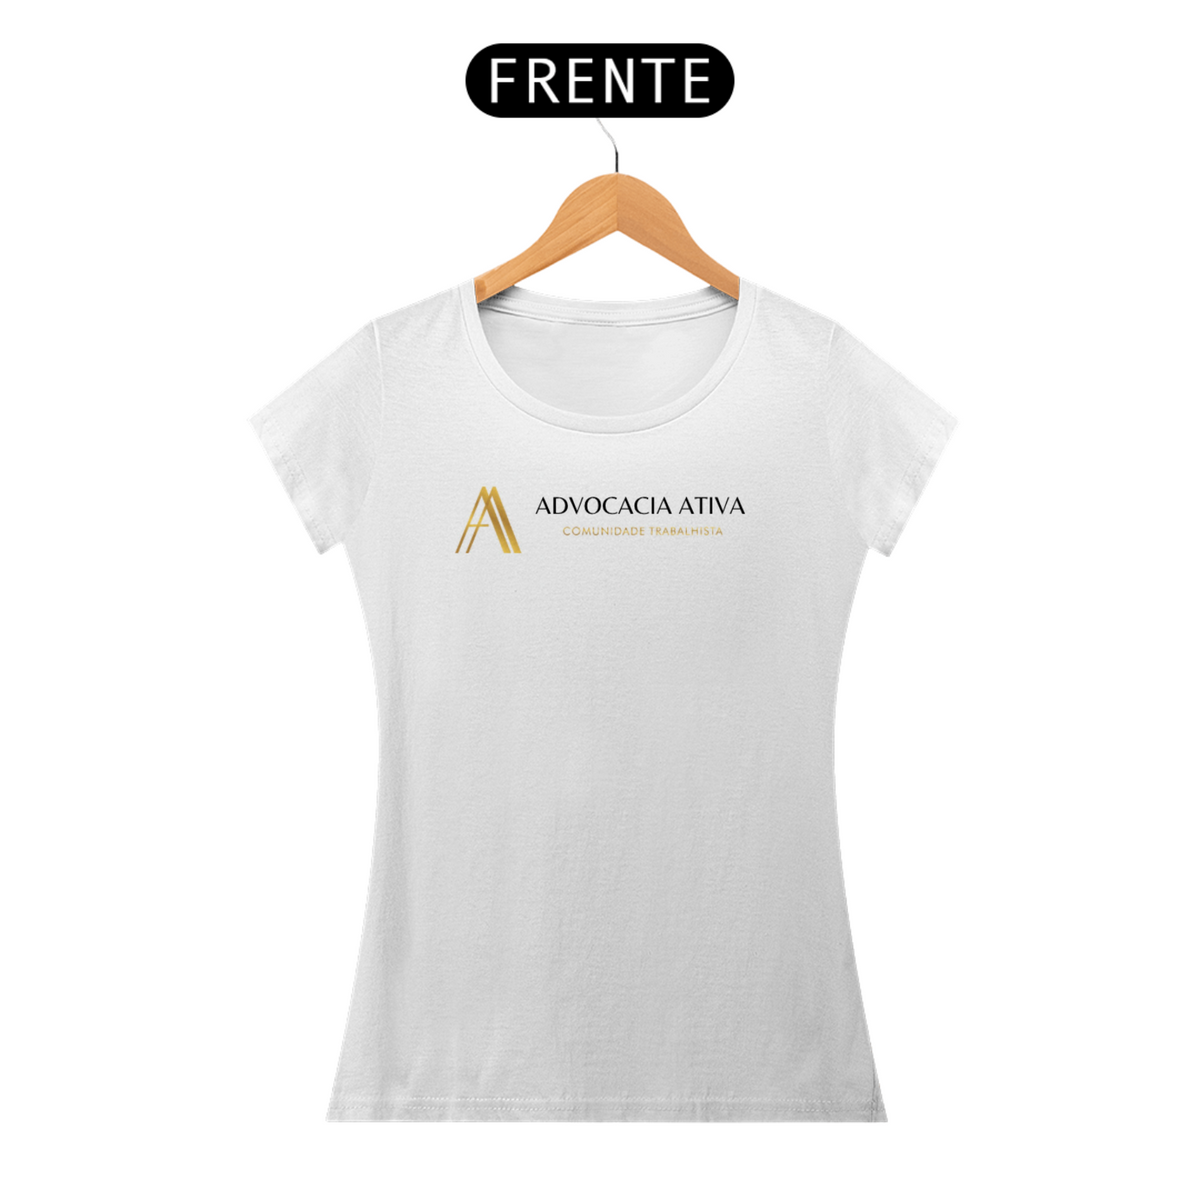 Nome do produto: Camiseta feminina - Advocacia Ativa